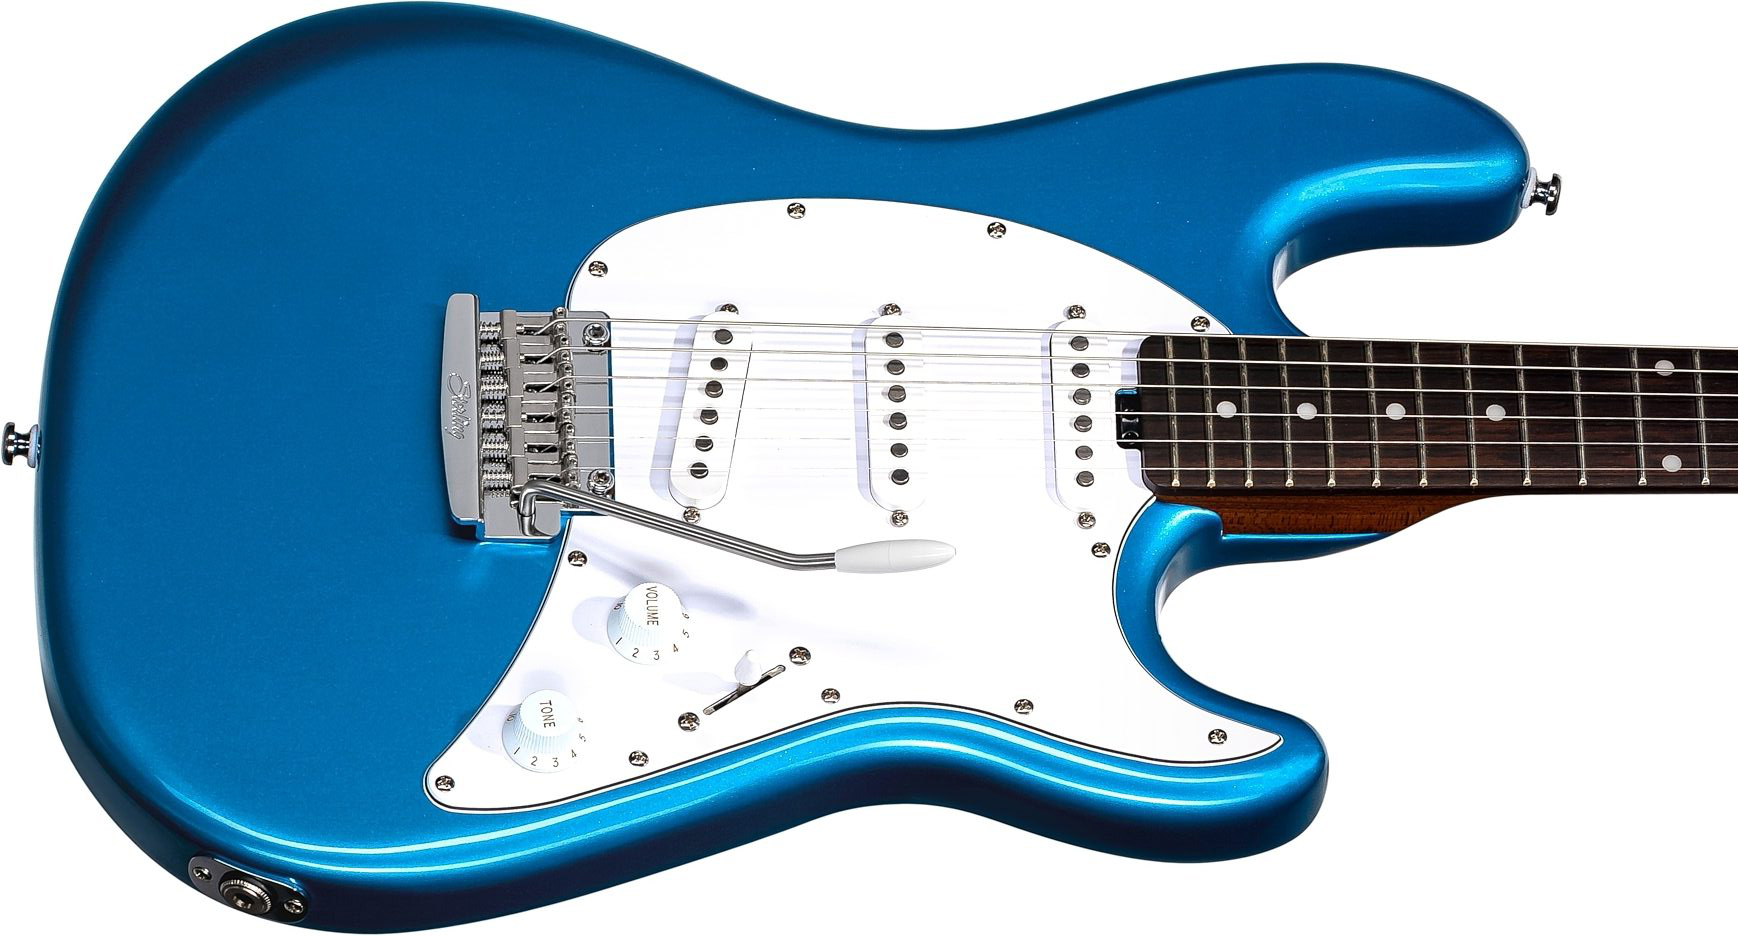 Sterling By Musicman Cutlass Ct50sss 3s Trem Rw - Toluca Lake Blue - E-Gitarre in Str-Form - Variation 2